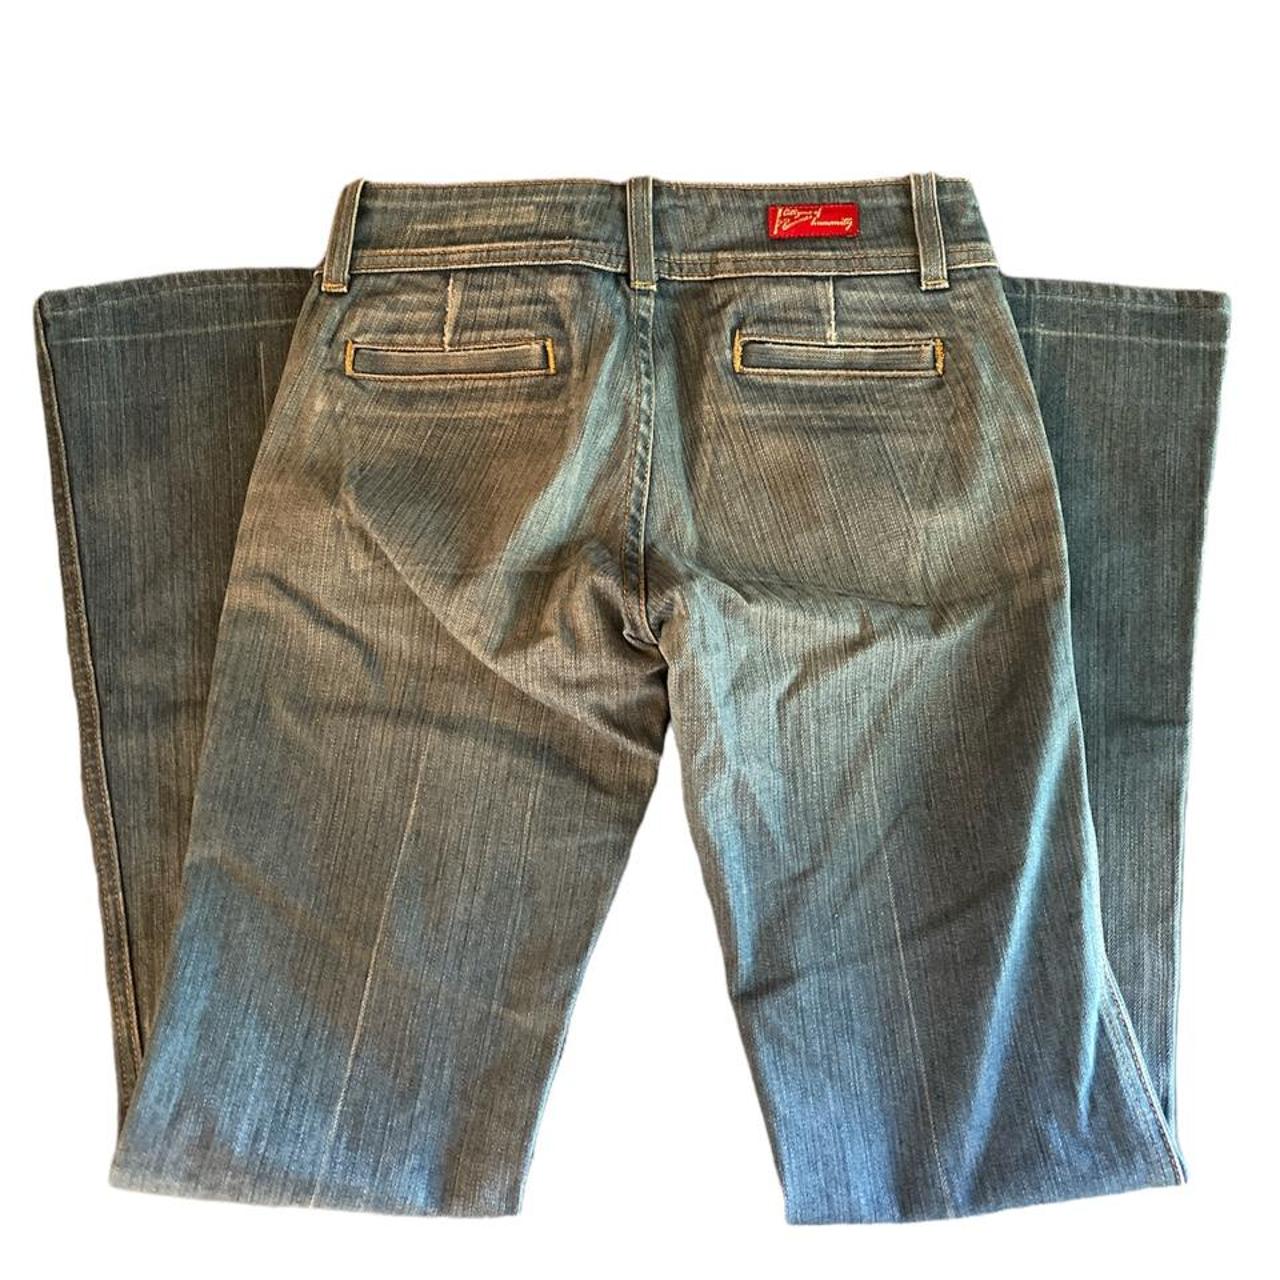 Product Image 3 - Darker light blue jeans, size